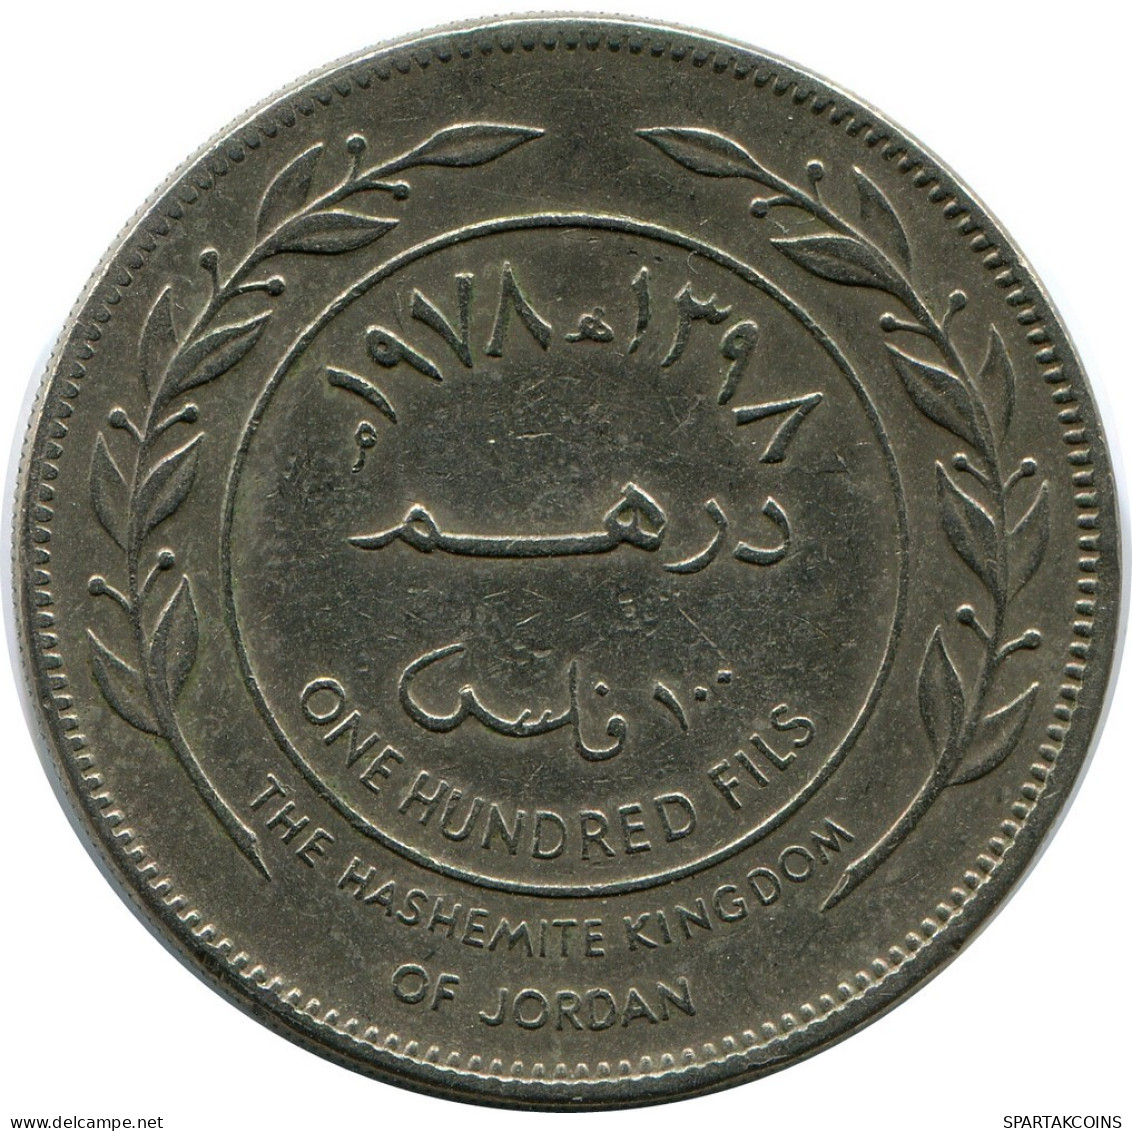 1 DIRHAM / 100 FILS 1978 JORDANIA JORDAN Islámico Moneda #AR008.E.A - Jordan